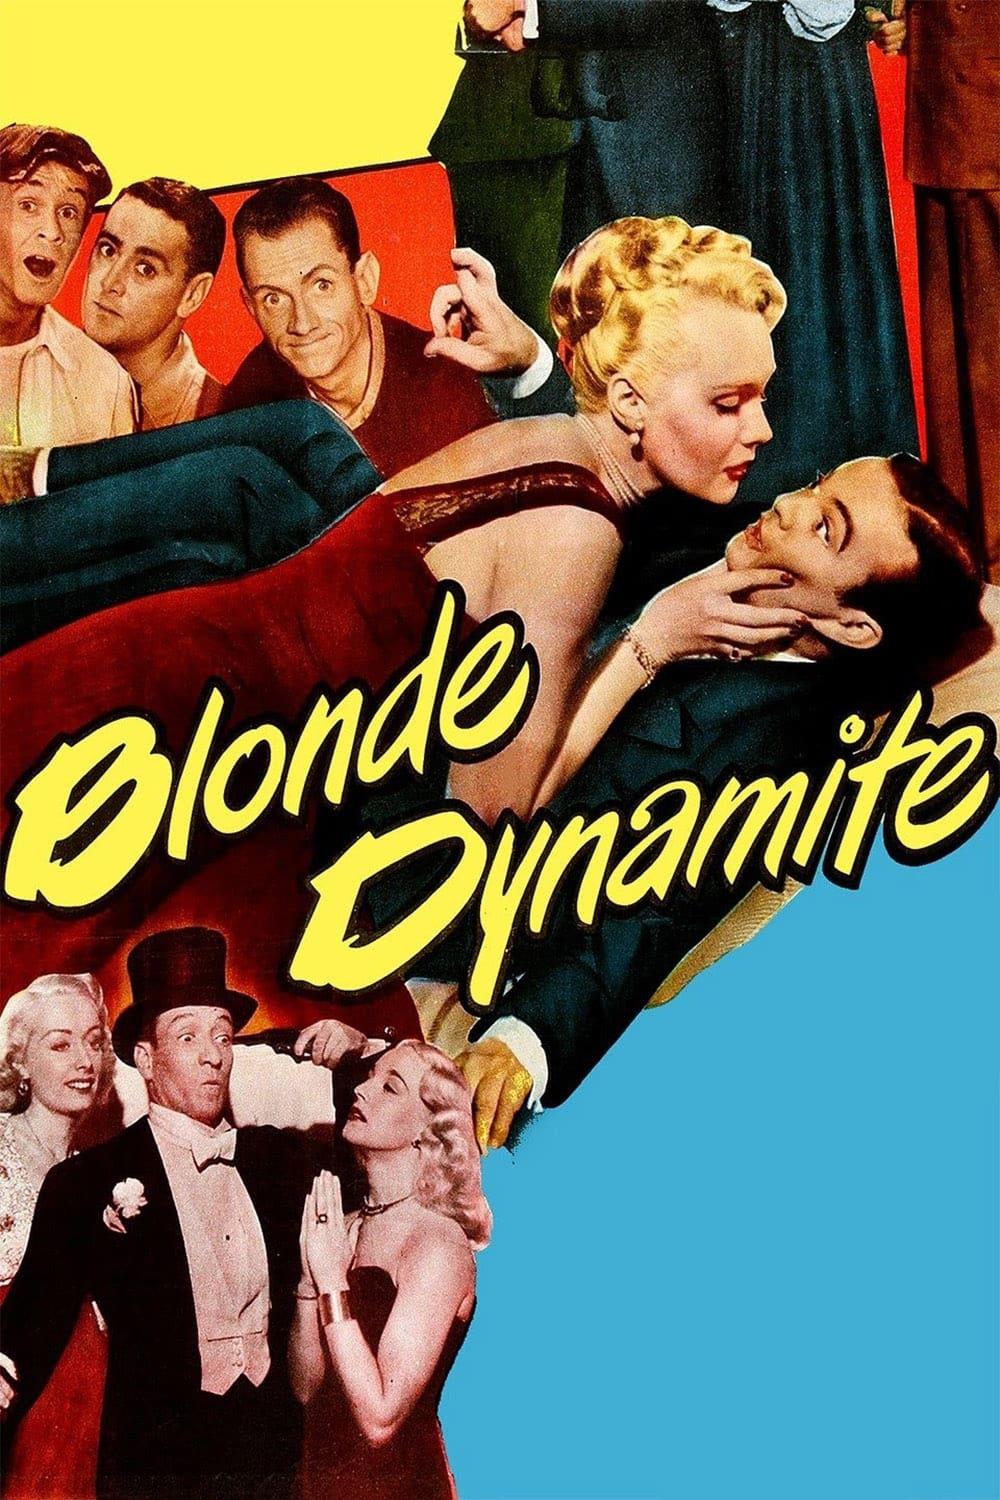 Blonde Dynamite poster